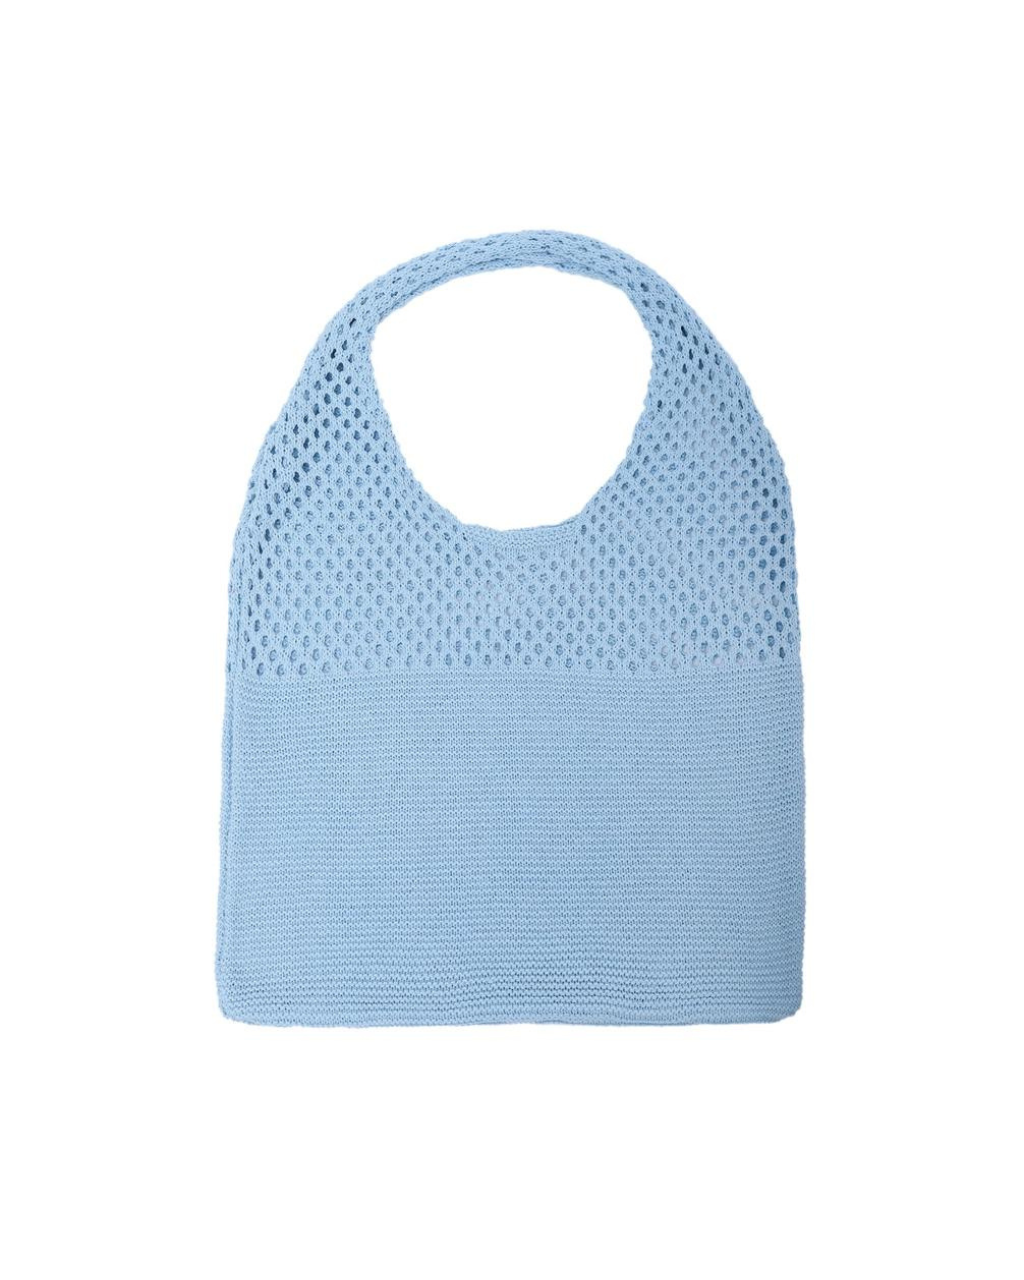 Cobalt Mesh Catchall Bag, Daytime Bag by Selini | LIT Boutique